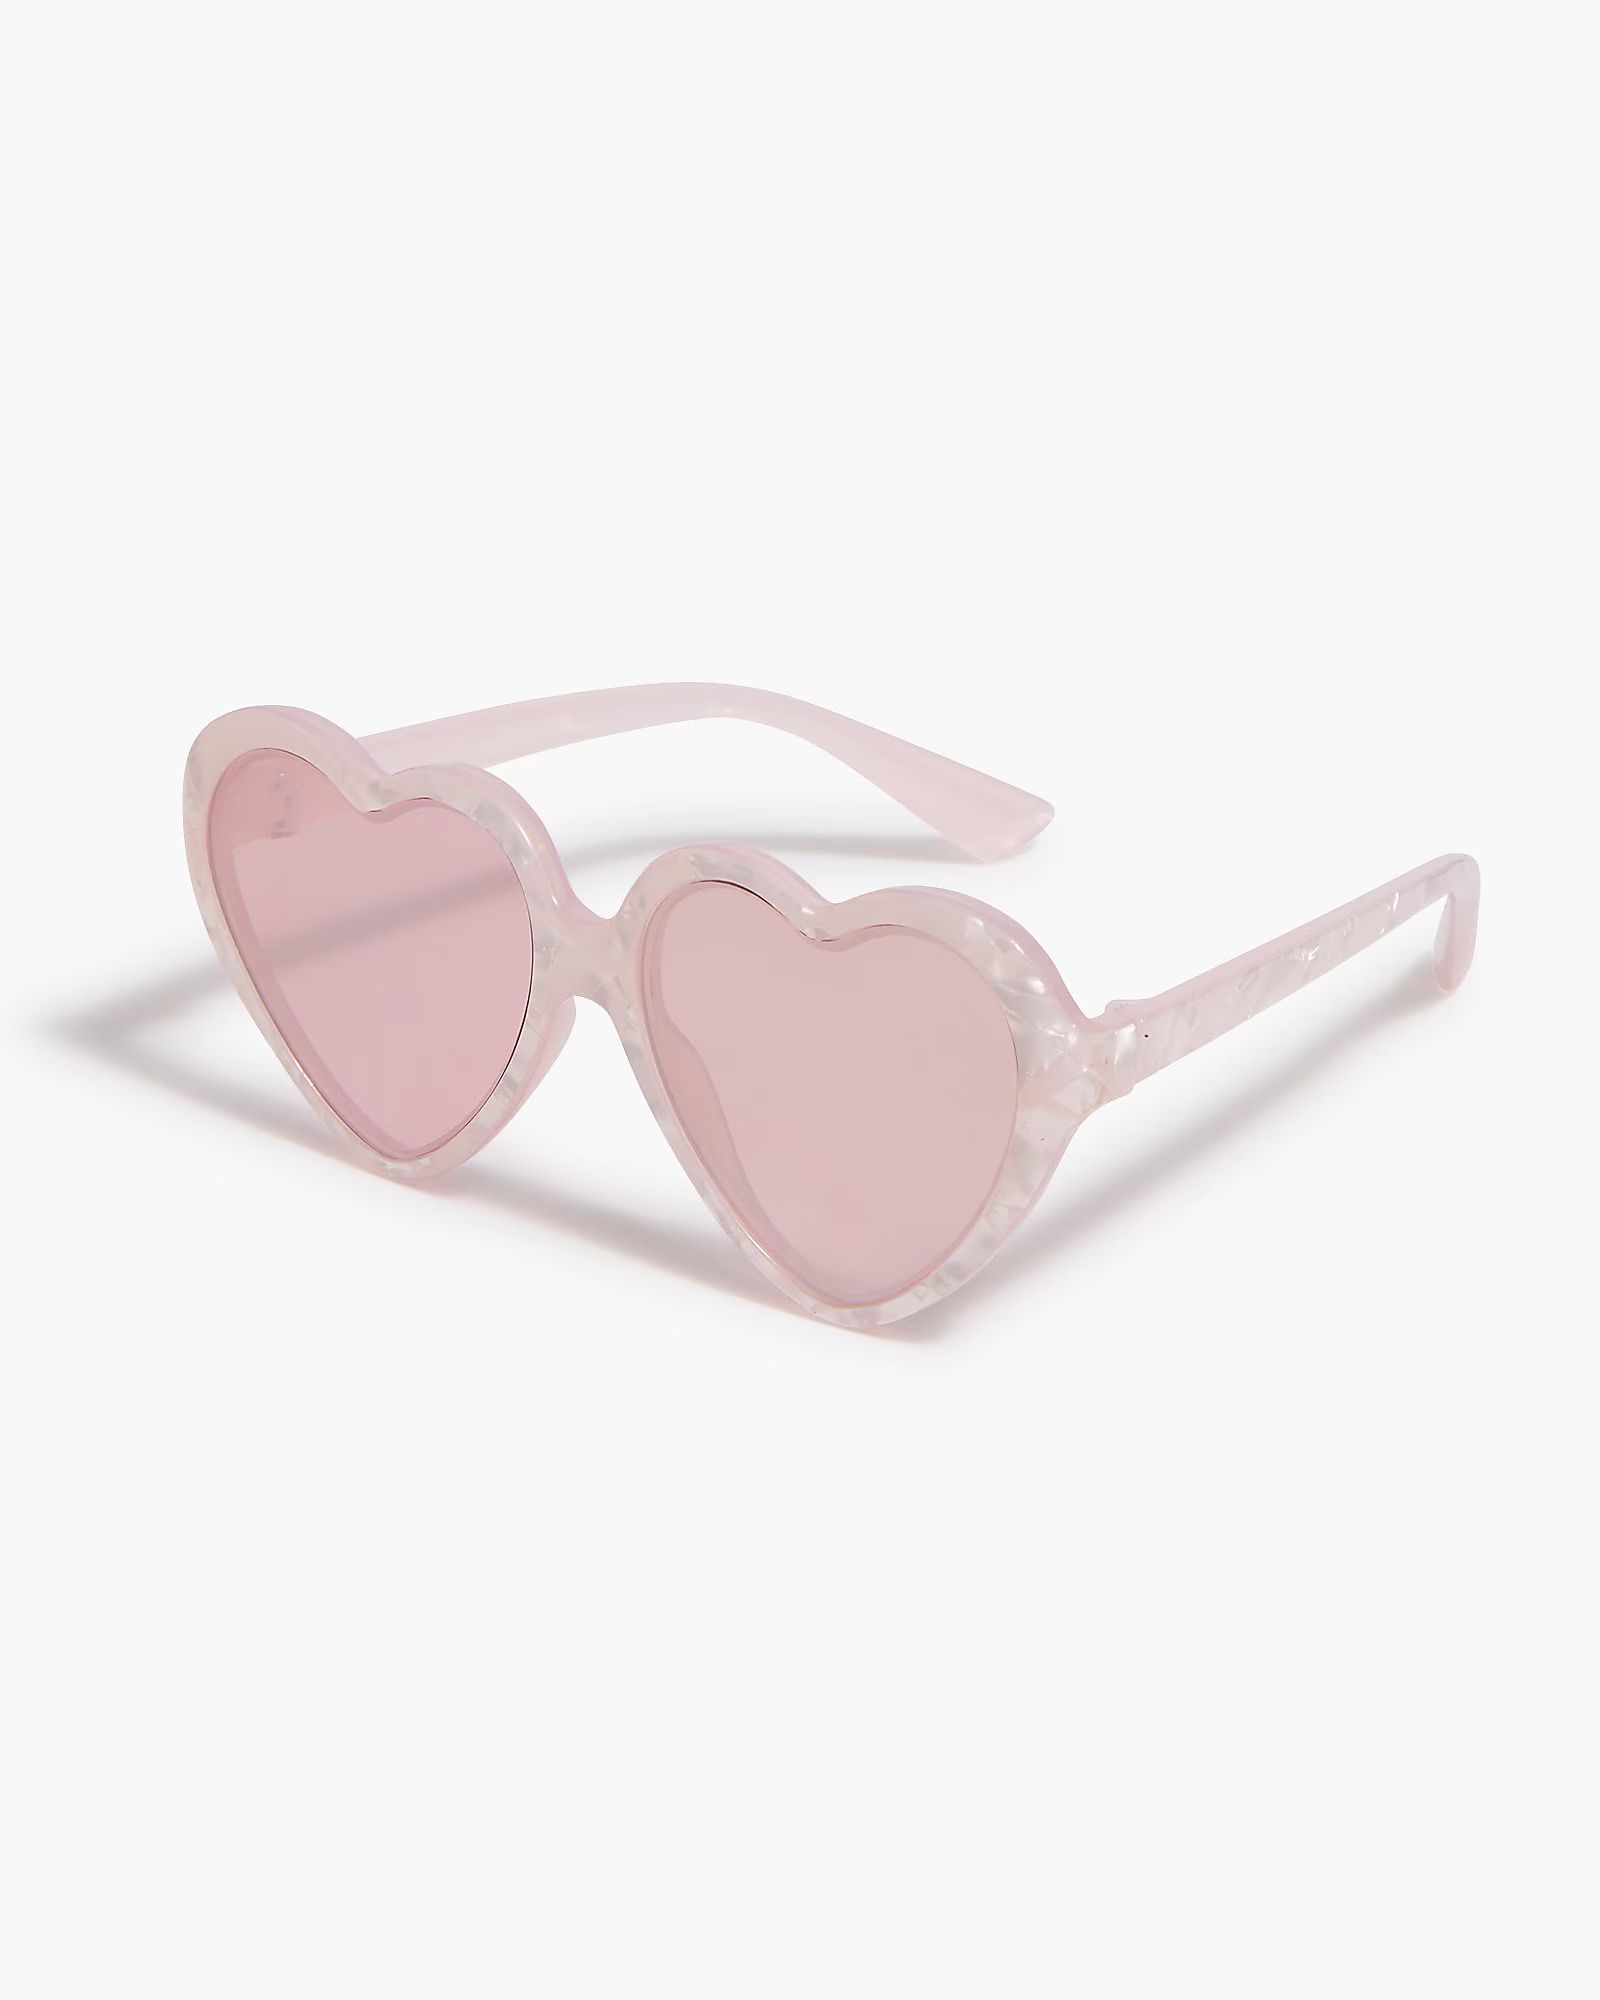 Girls' heart-shaped sunglasses | J.Crew Factory